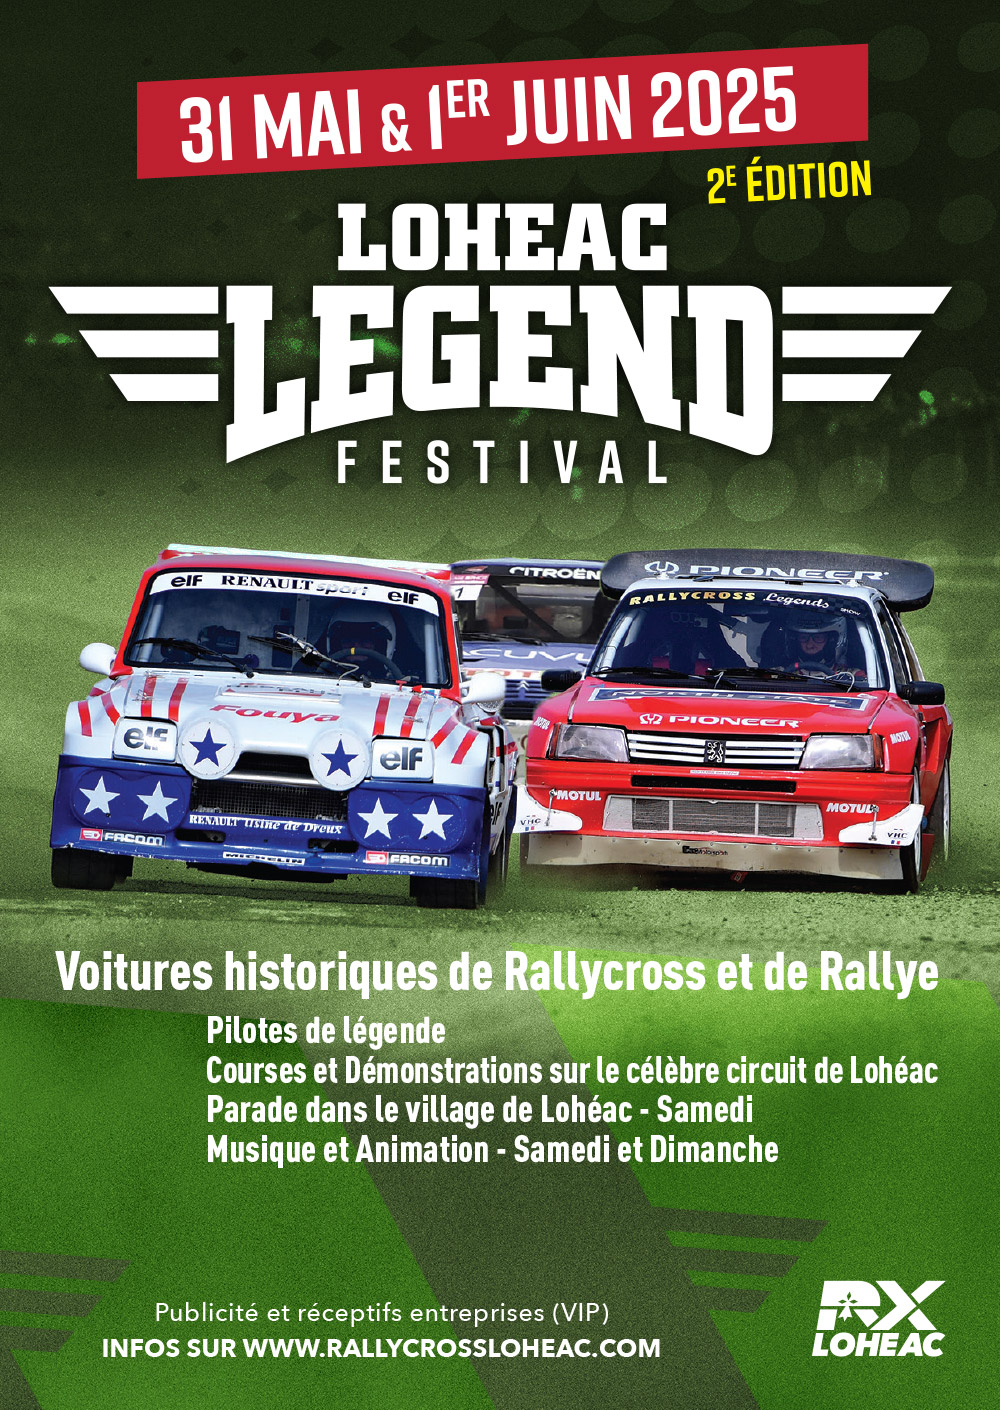 Loheac Legend Festival 2025